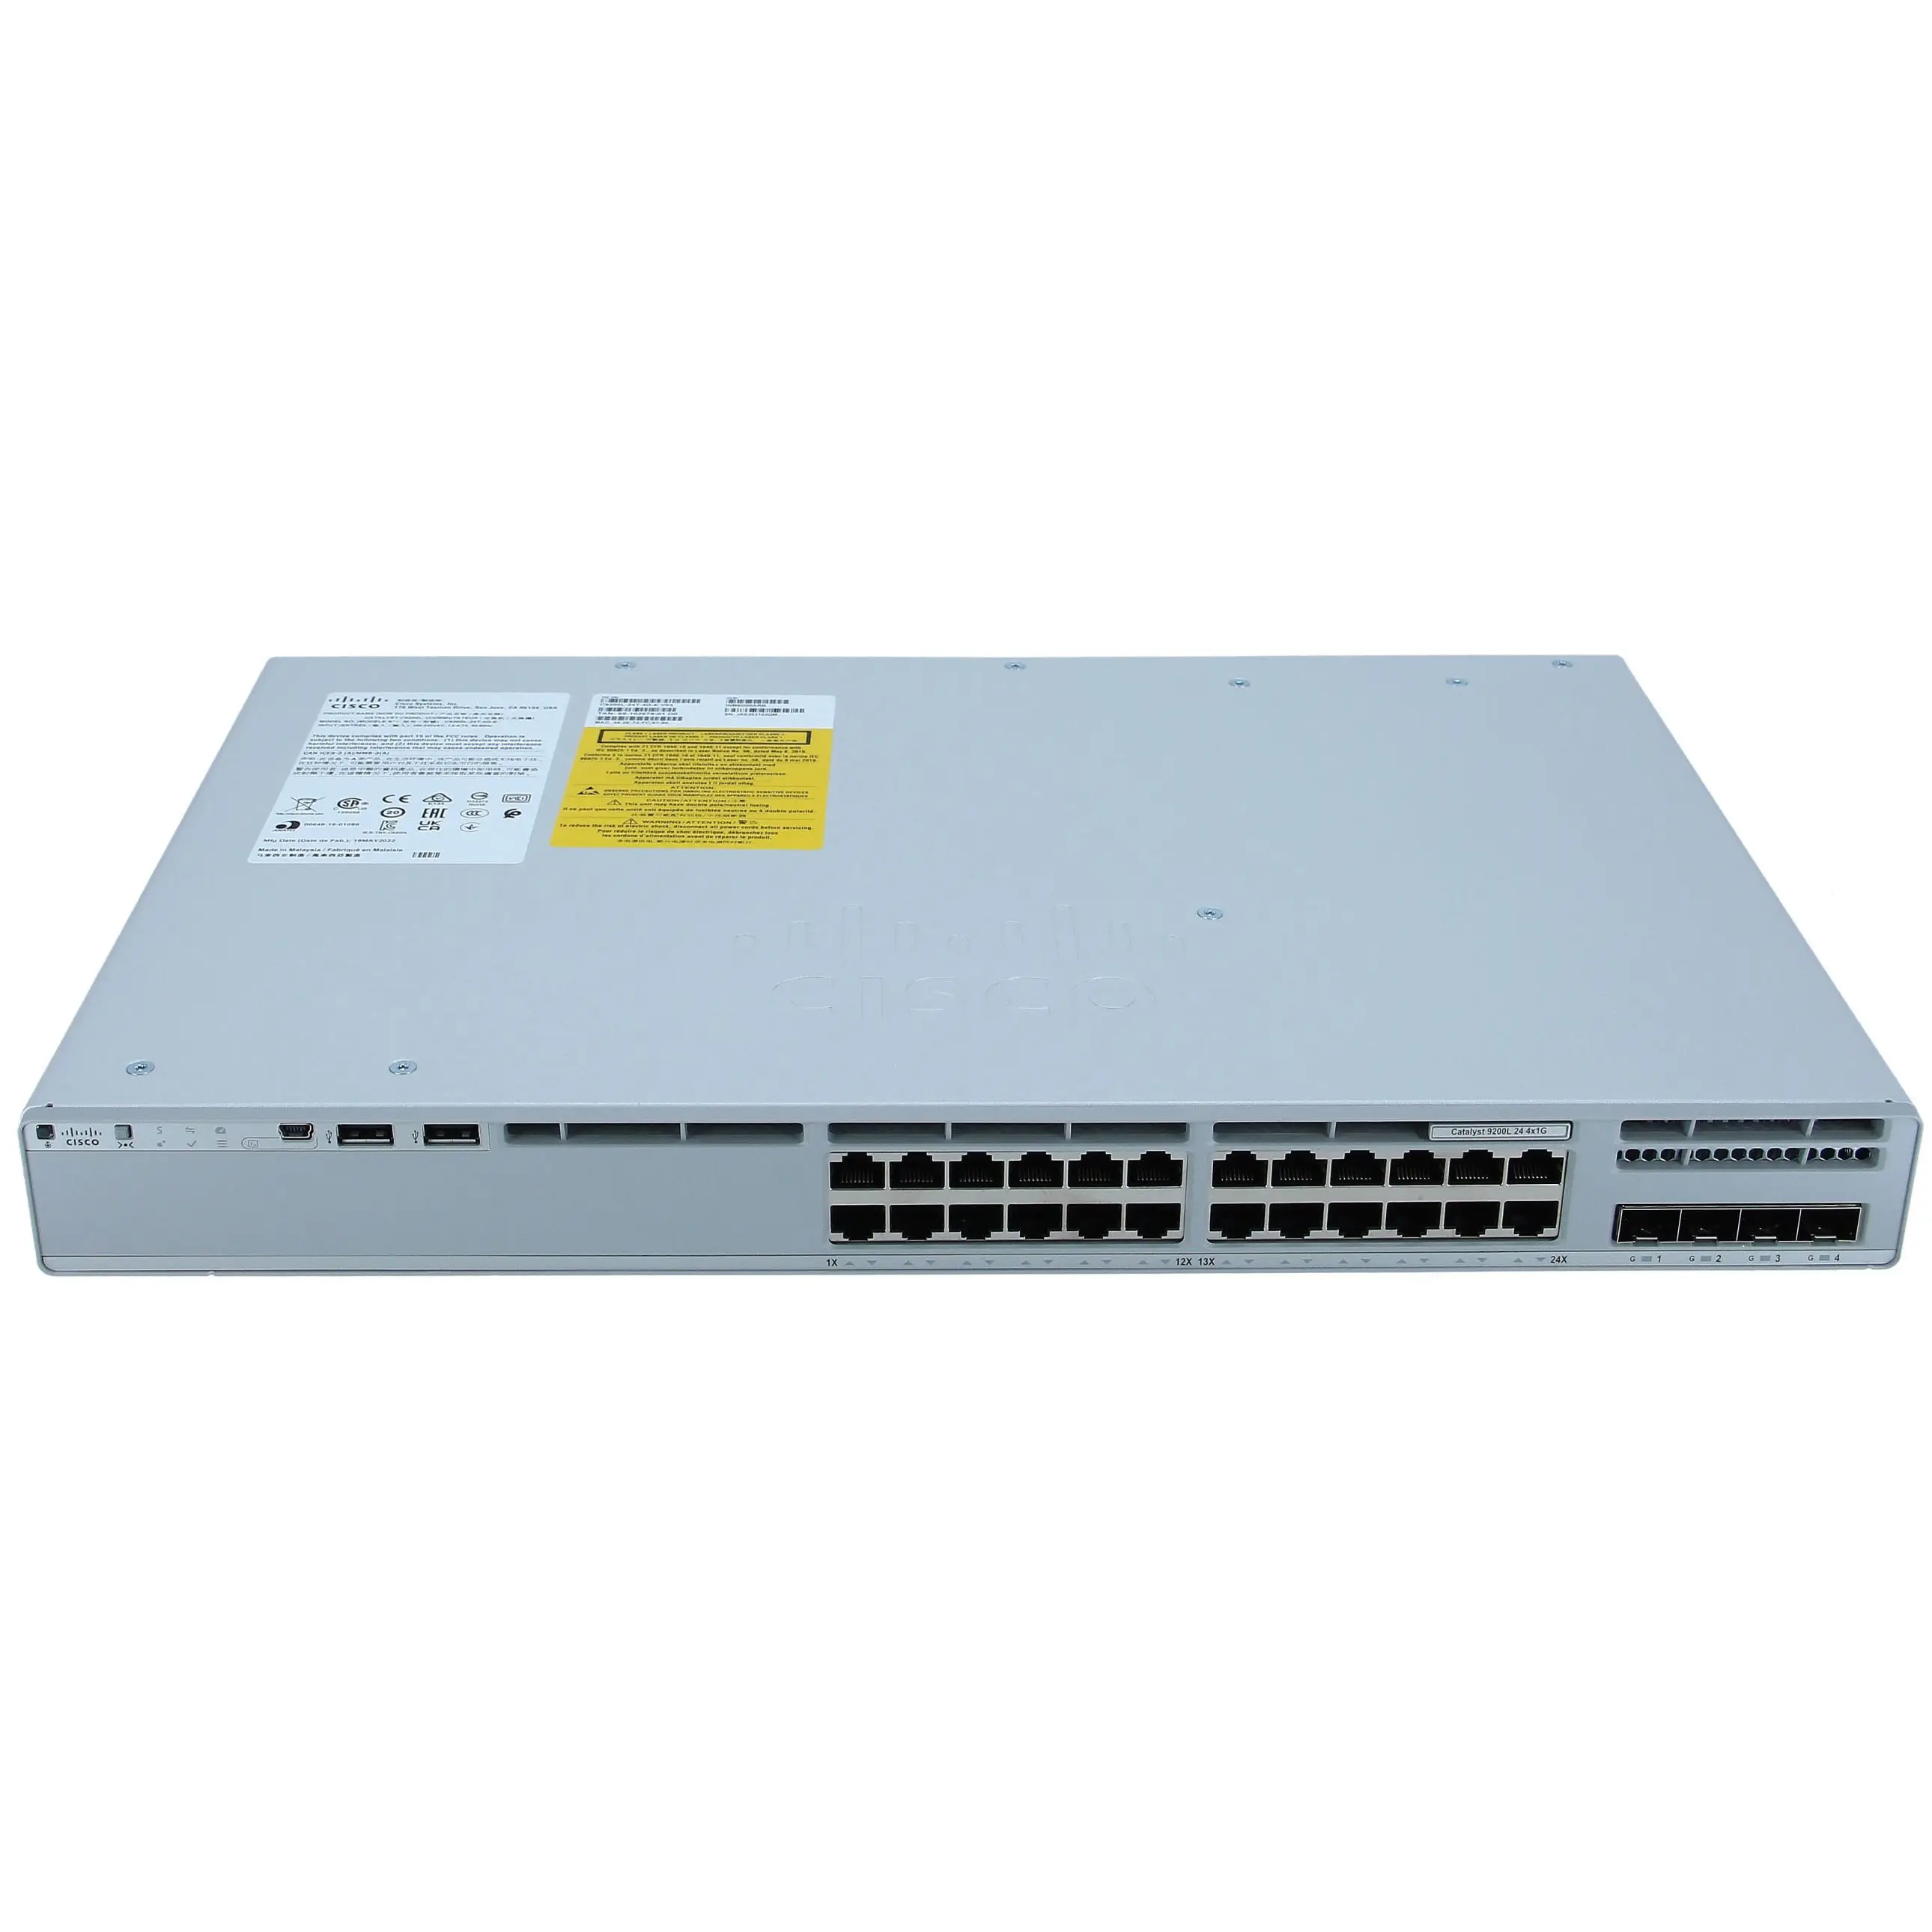 Solusi jaringan harga yang baik C9200L-24T-4G-A terkelola internet rj45 sfp didukung daya melalui ethernet port jaringan switch